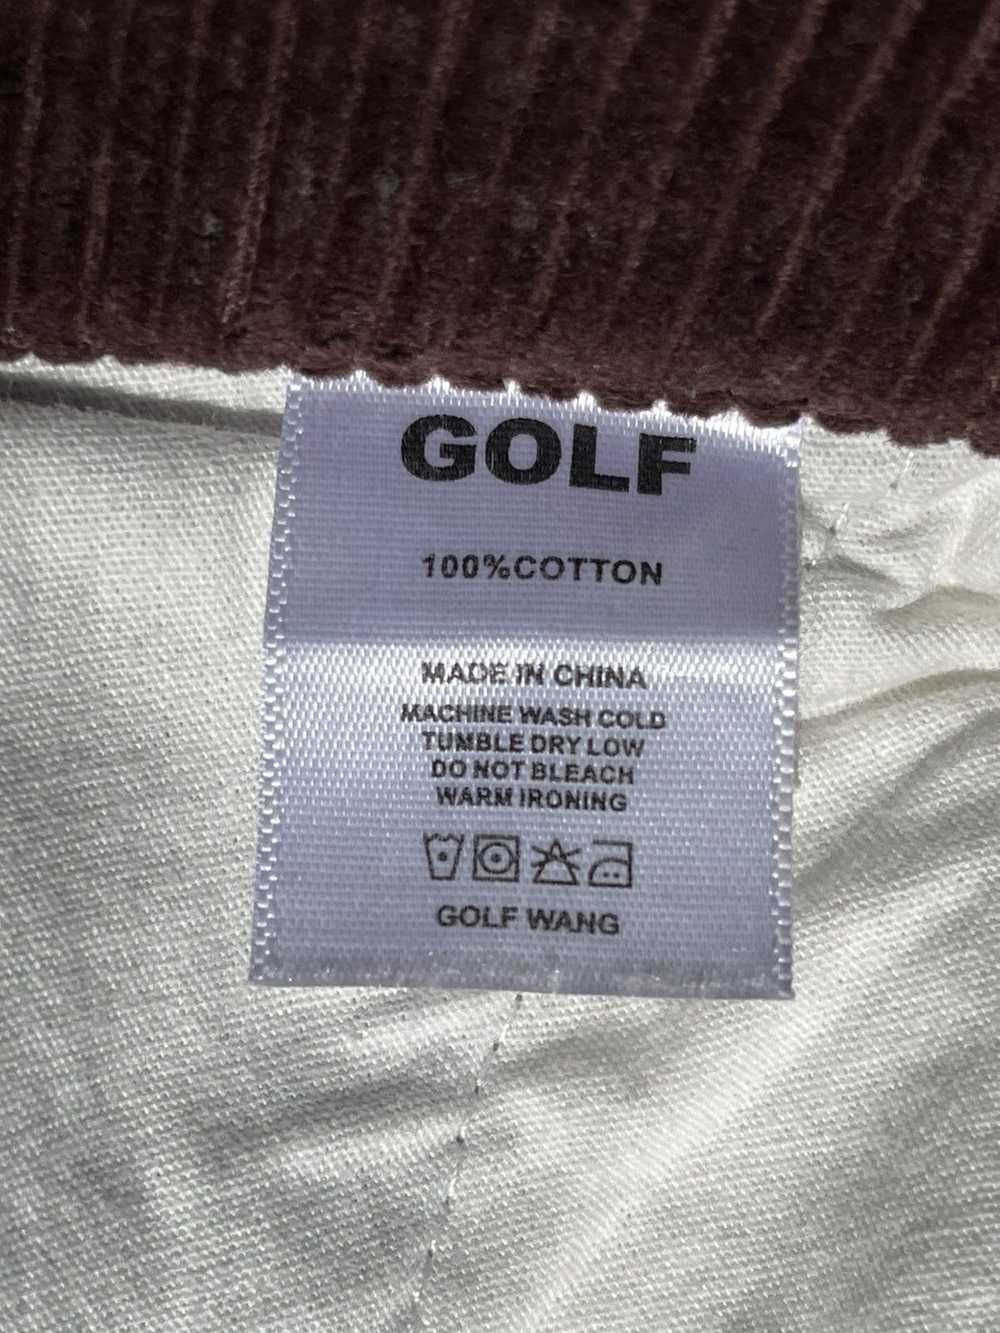 Golf Wang Golf wang corduroy cargo pants - image 6